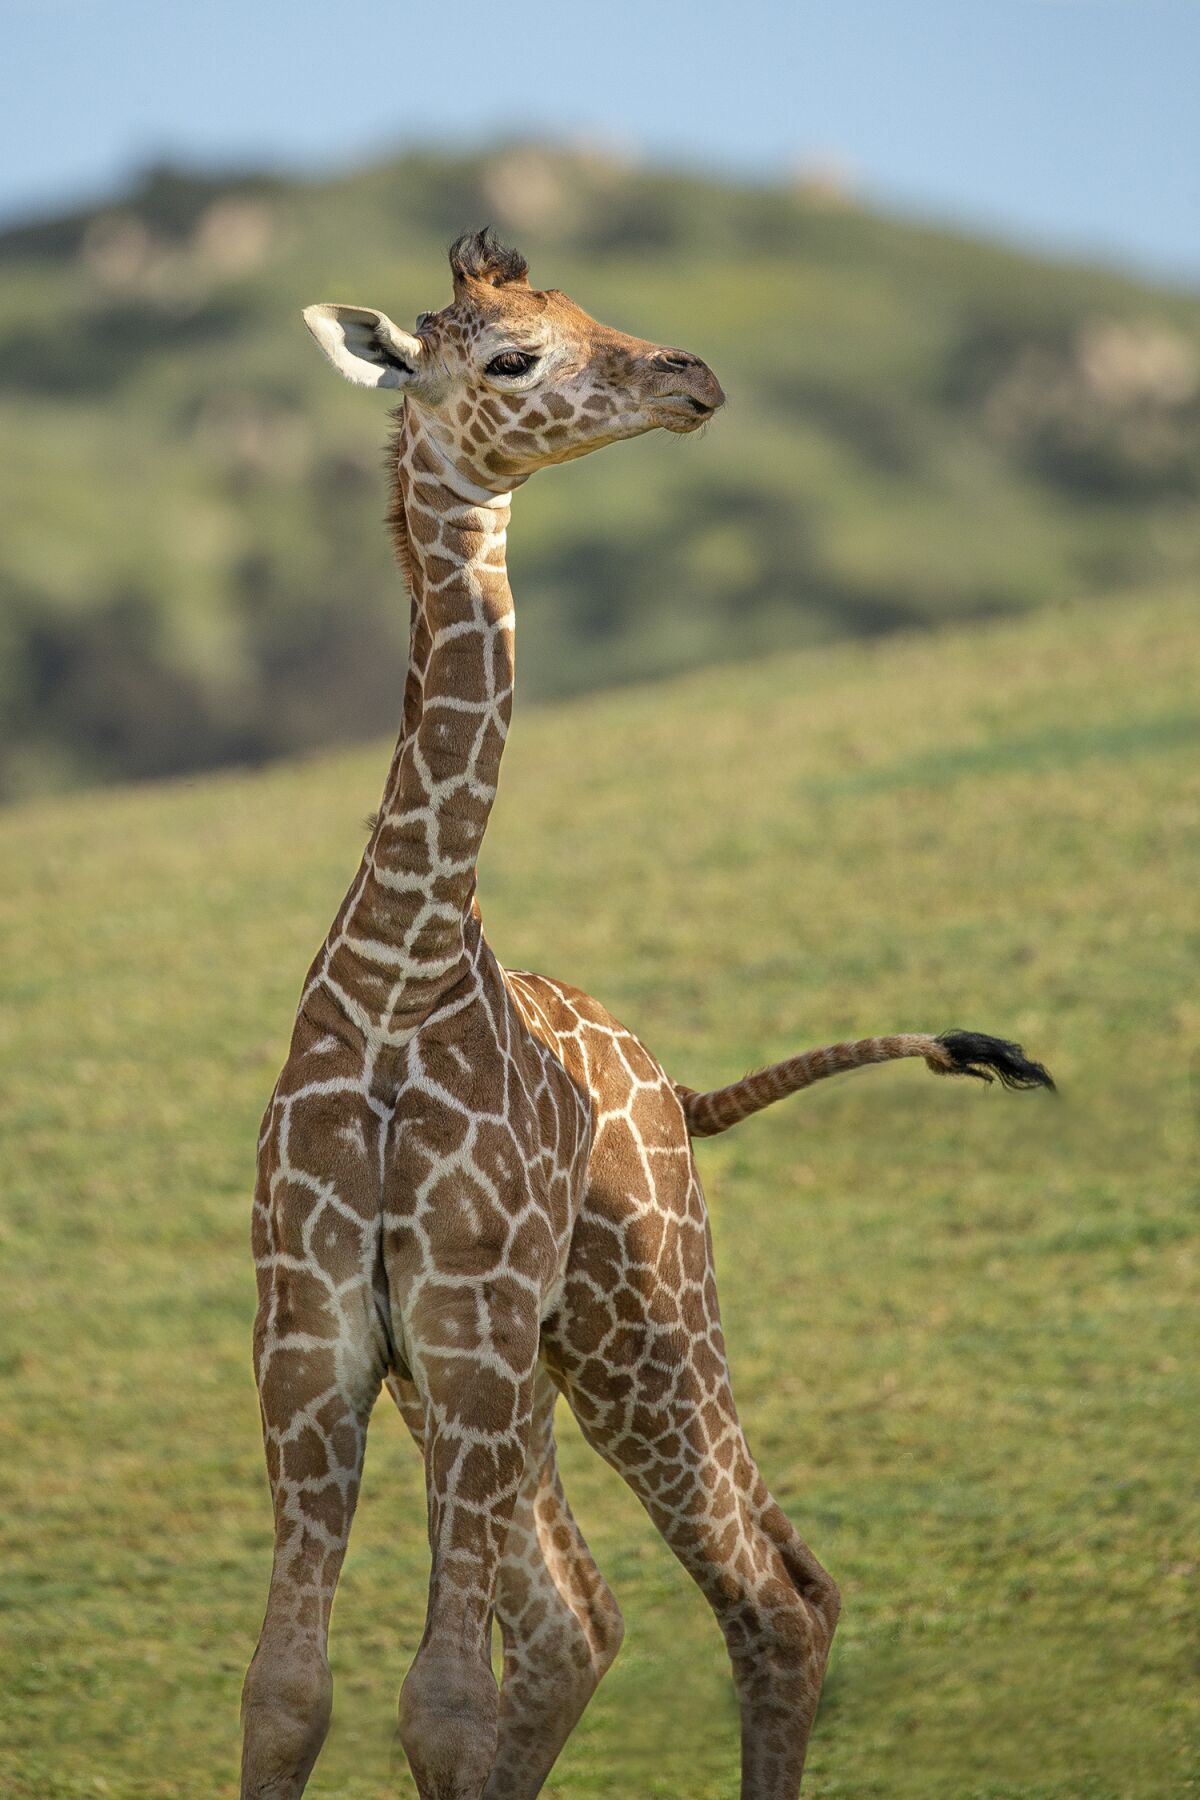 One-month-old giraffe calf, Zahara, at the San Diego Zoo Safari Park